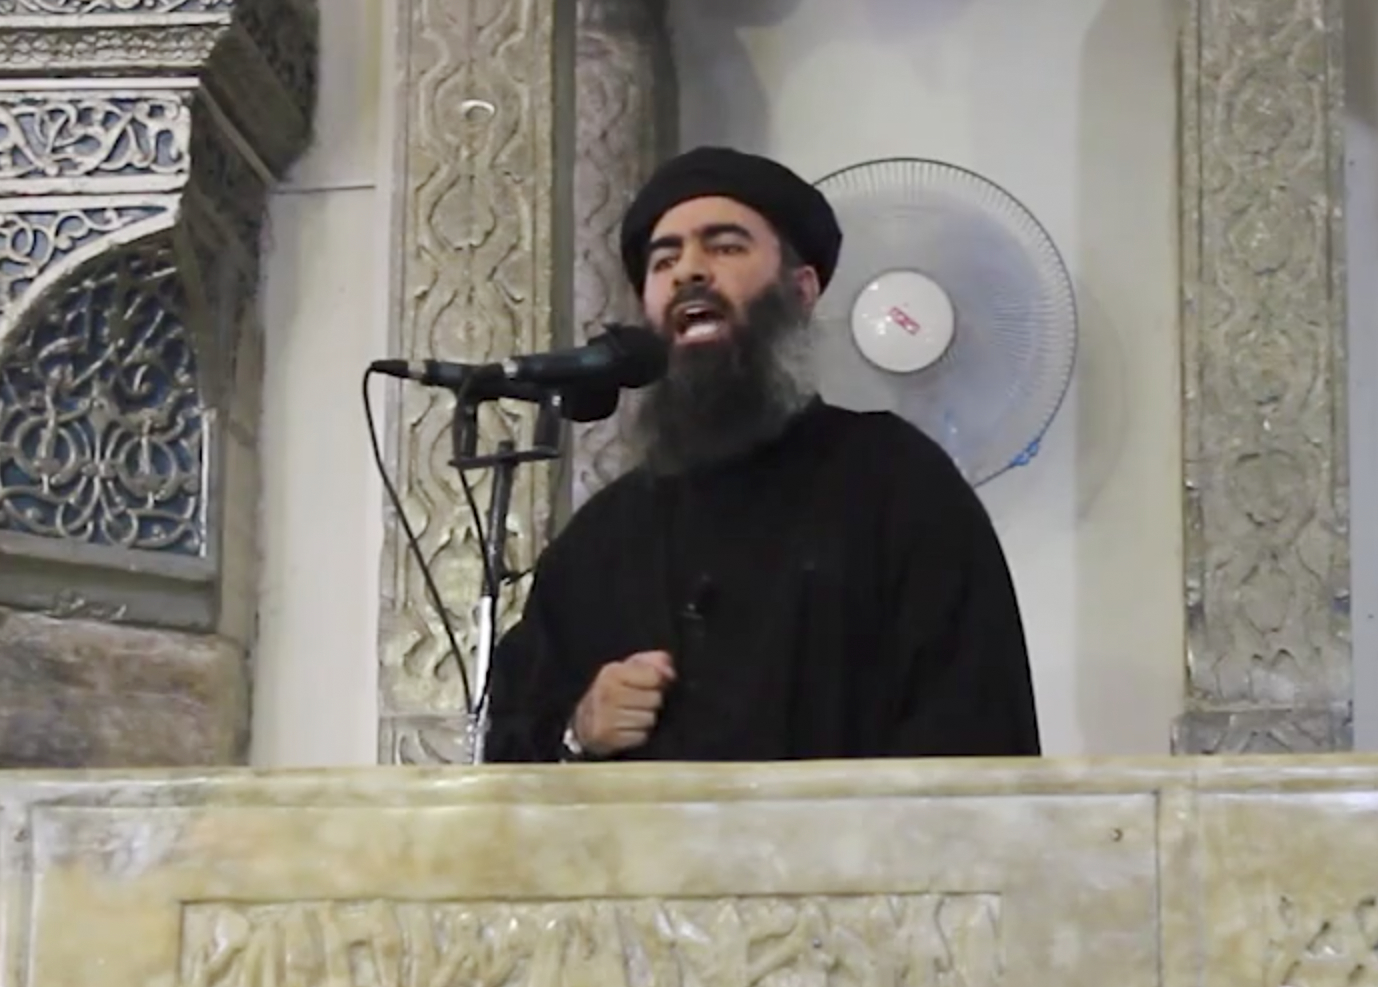 Abu Bakr al-Baghdadi delivering a sermon at a mosque in Iraq on July 5, 2014. (AP)